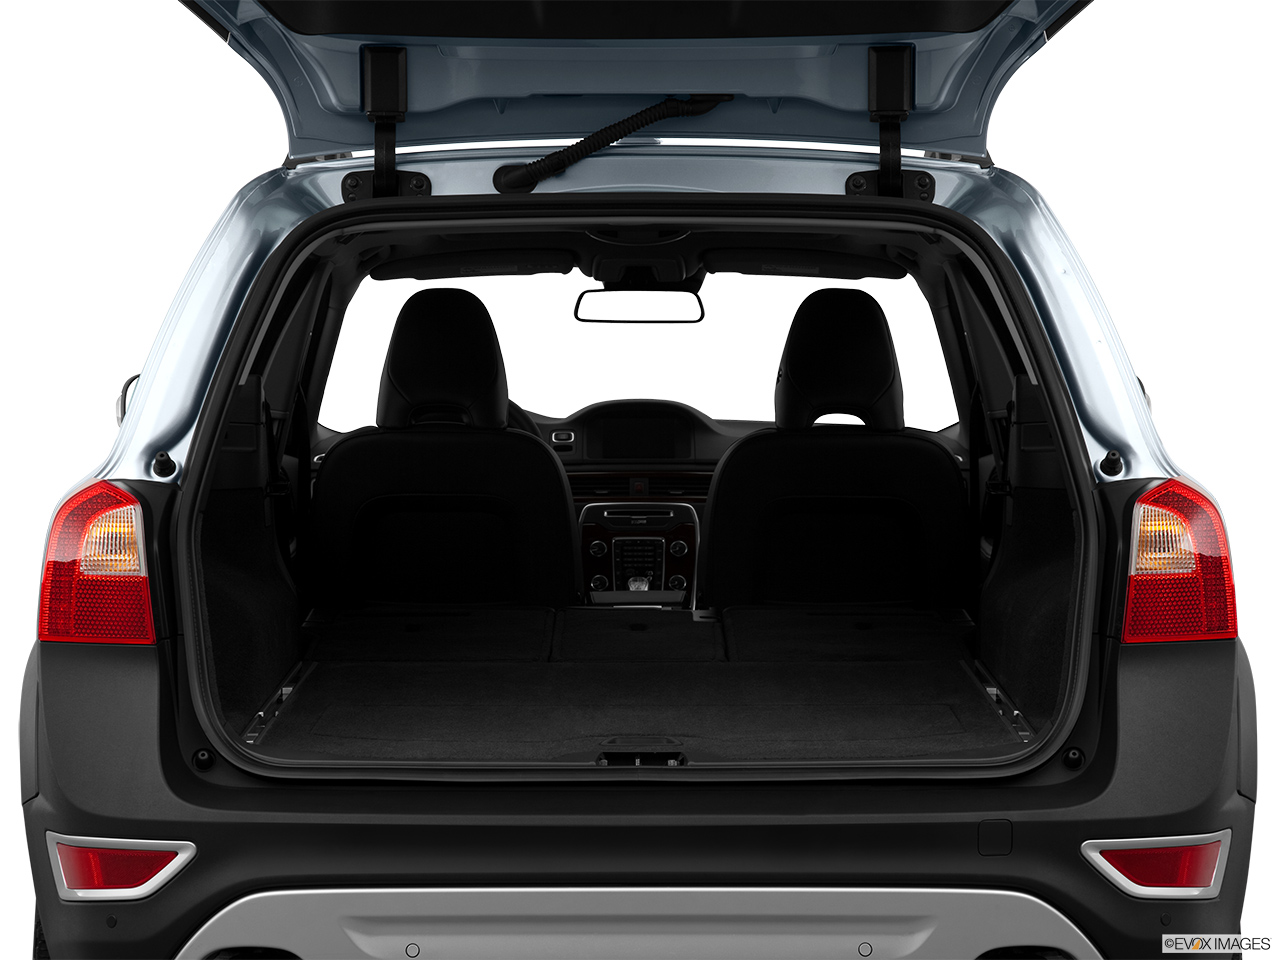 2013 Volvo XC70 T6 AWD Platinum Hatchback & SUV rear angle. 